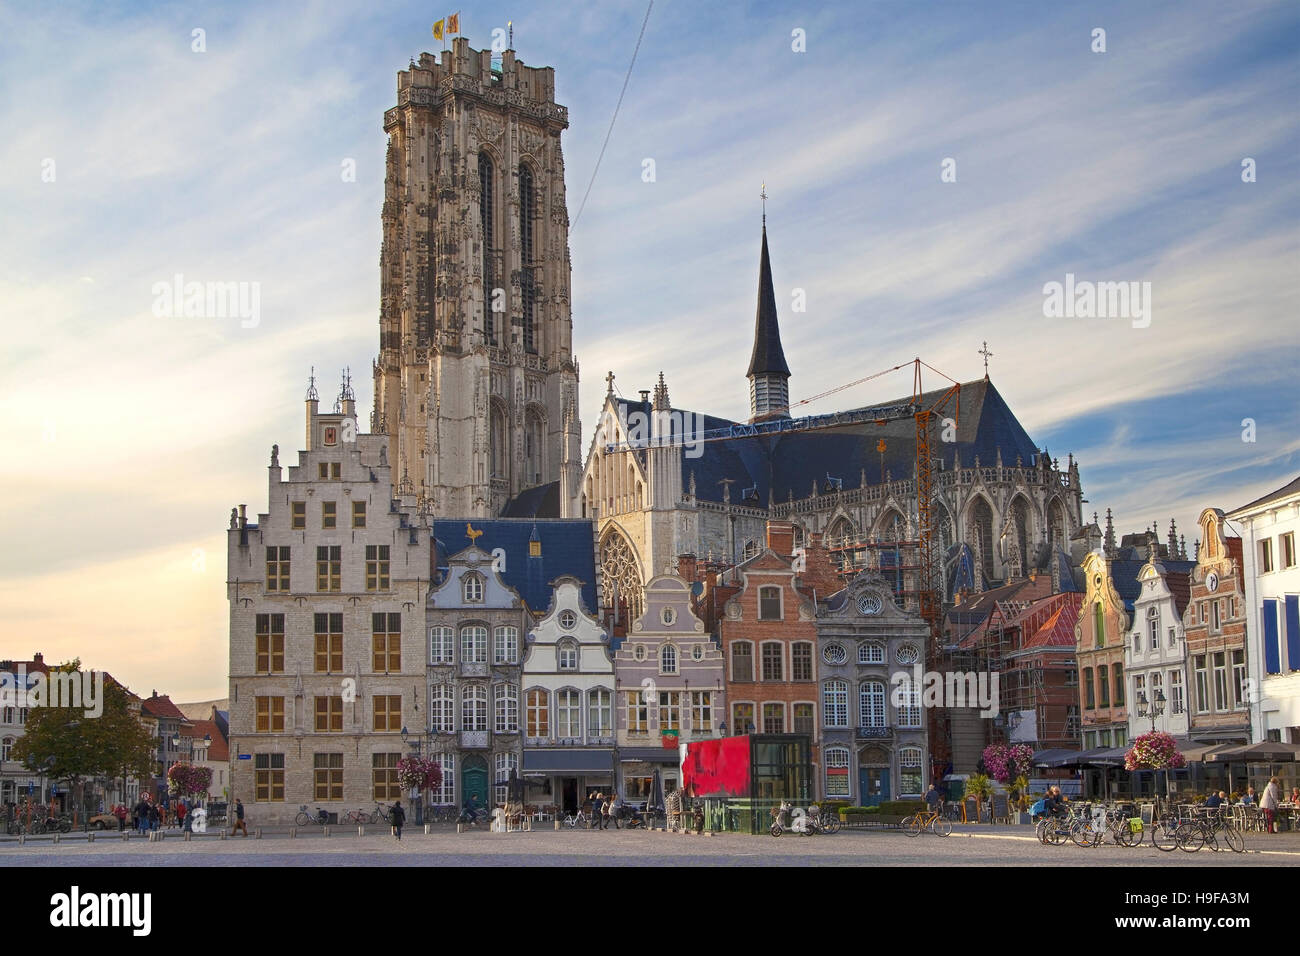 Grand Market Square von Mechelen, Belgien. Stockfoto